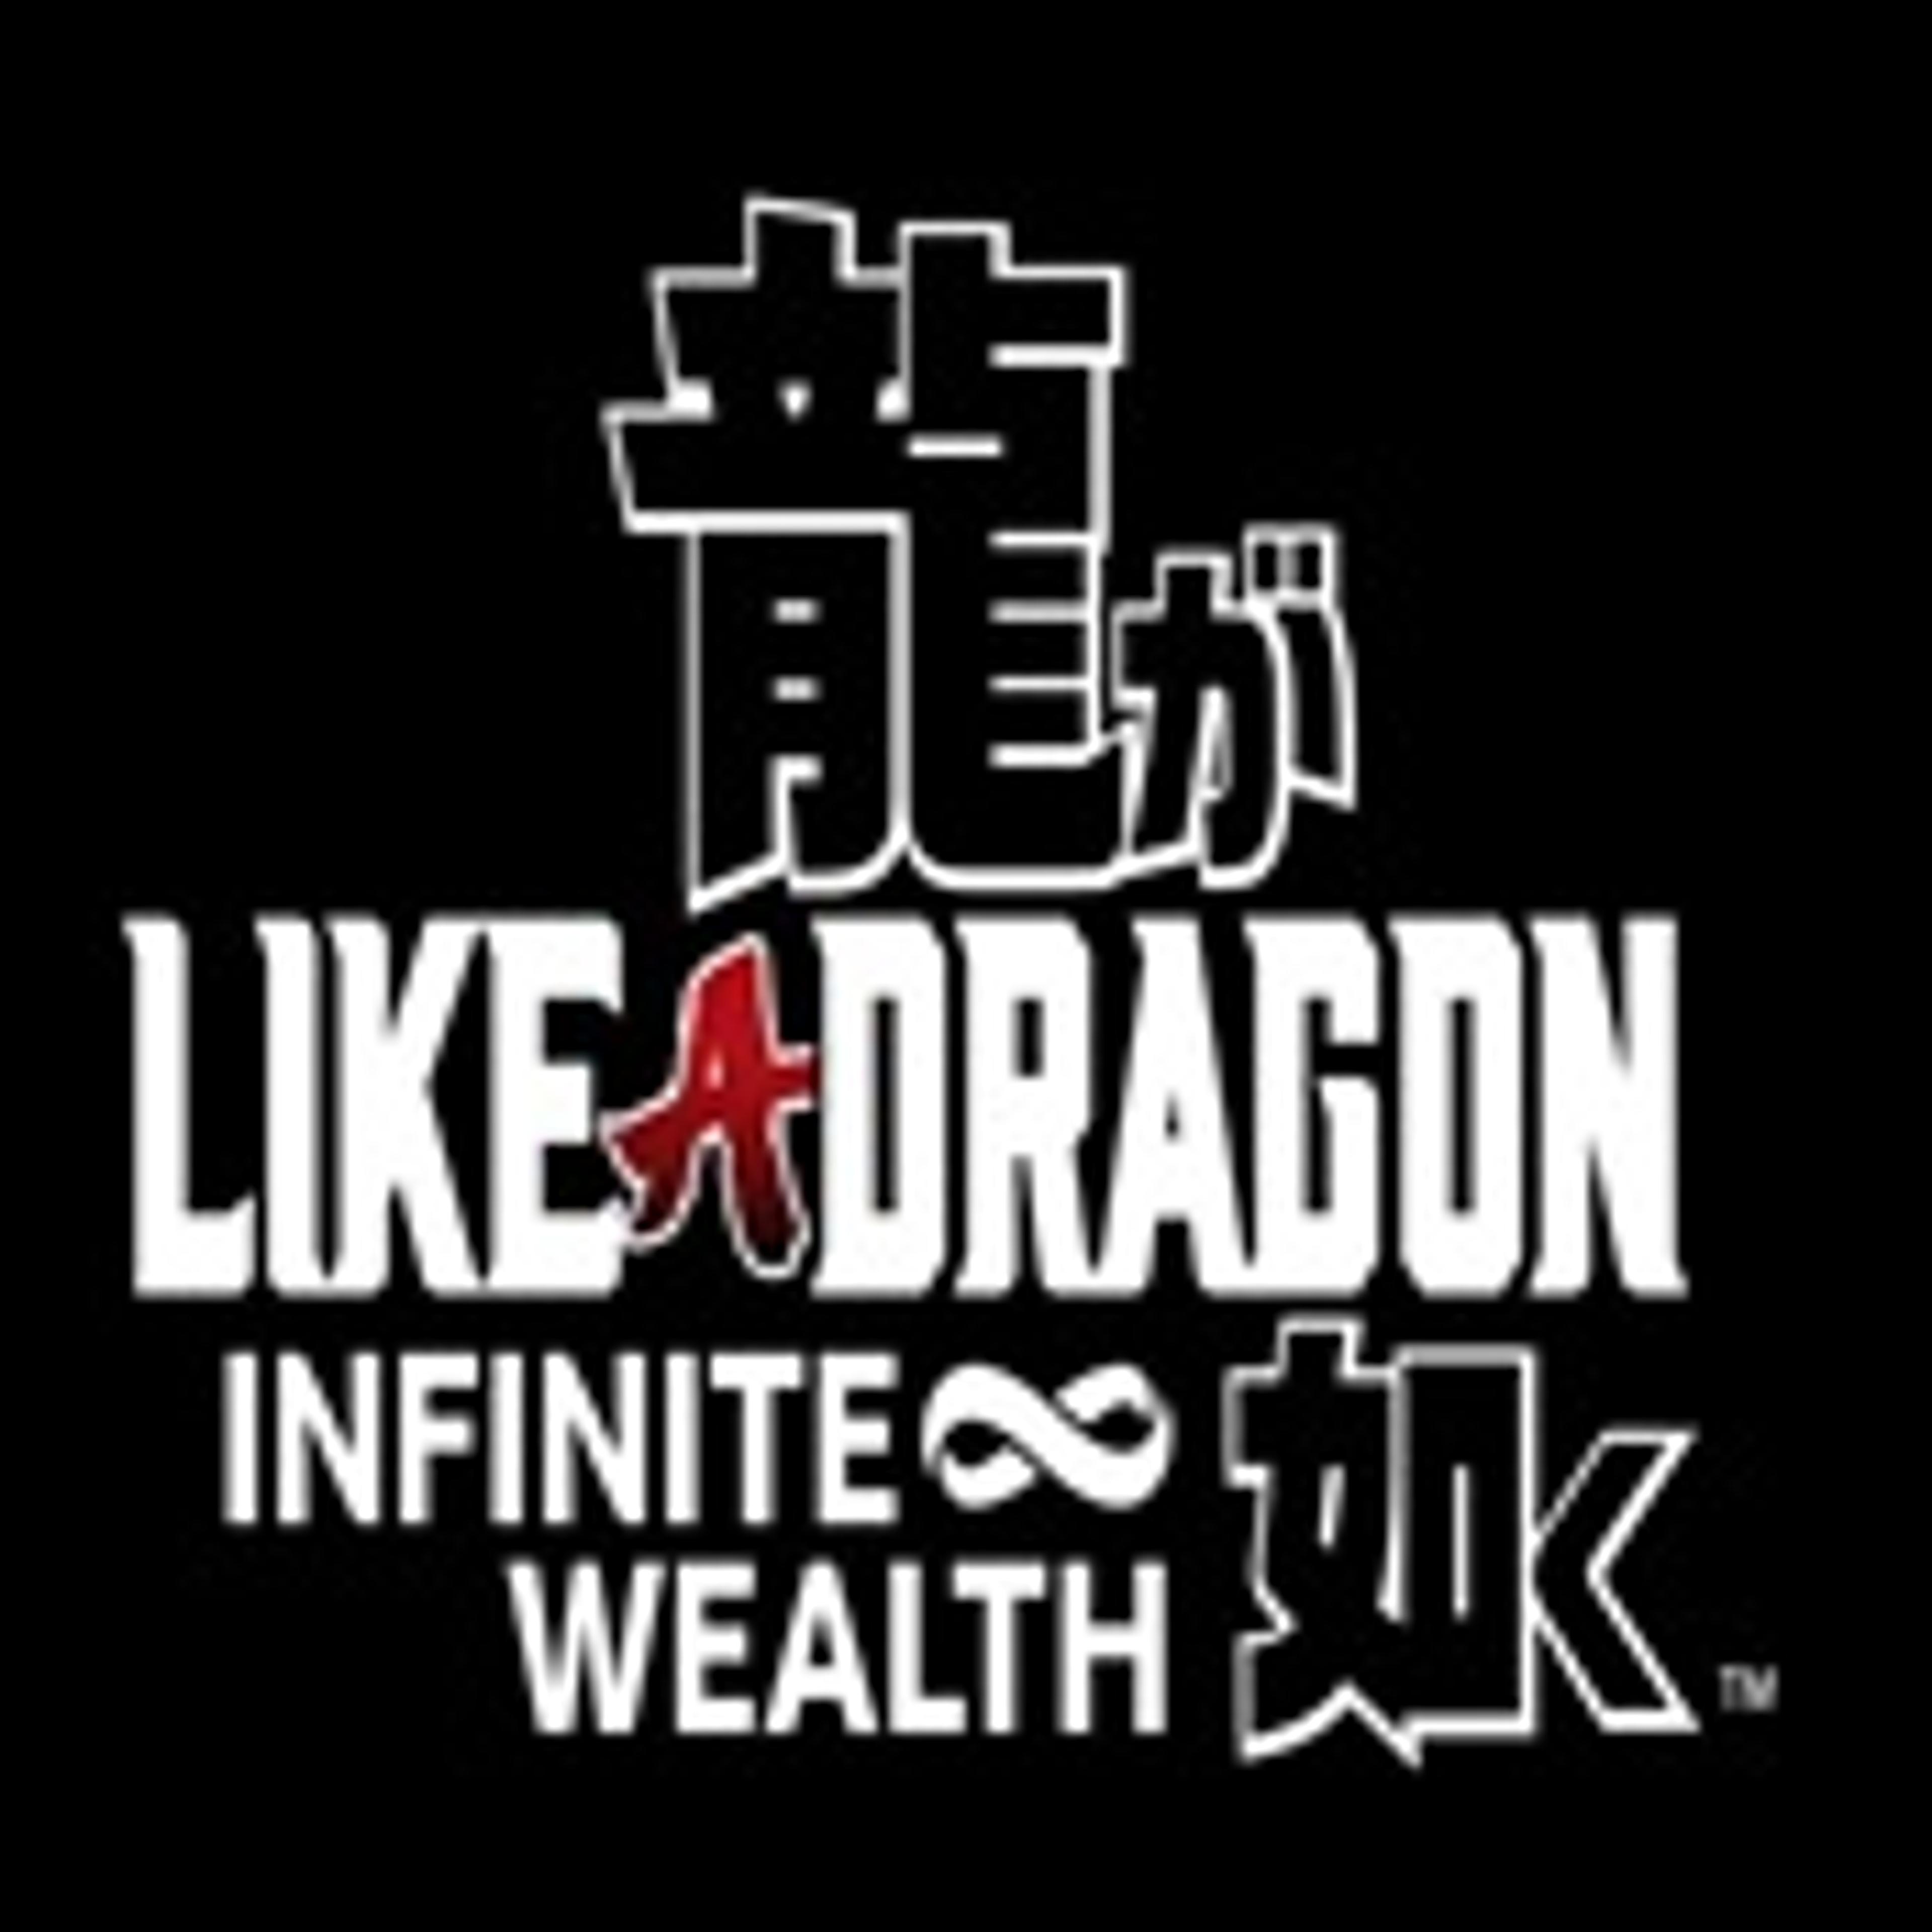 Like a Dragon : Infinite Wealth via Steam Wallet Code